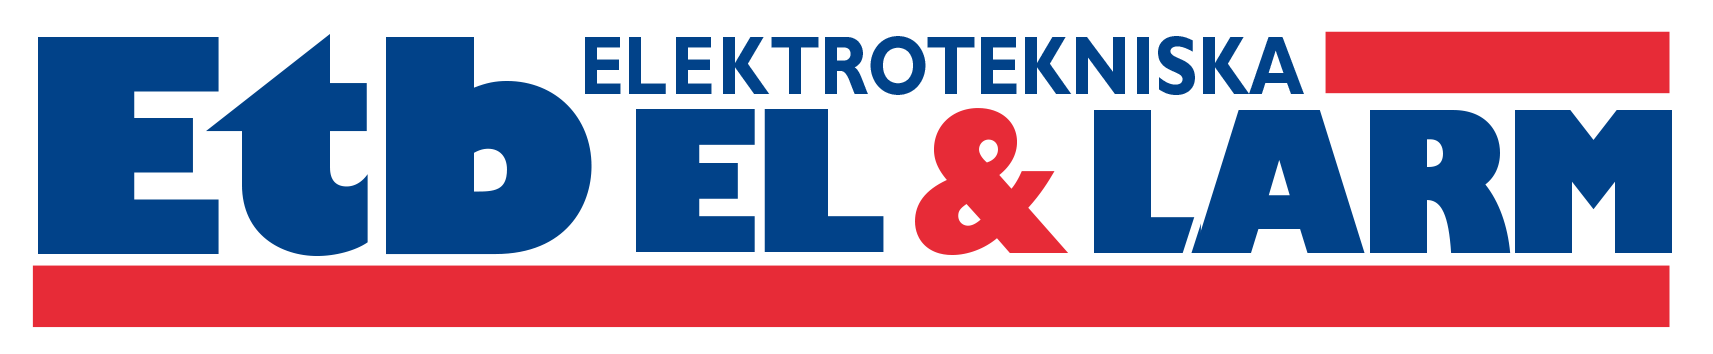 ETB Logo Blå/röd